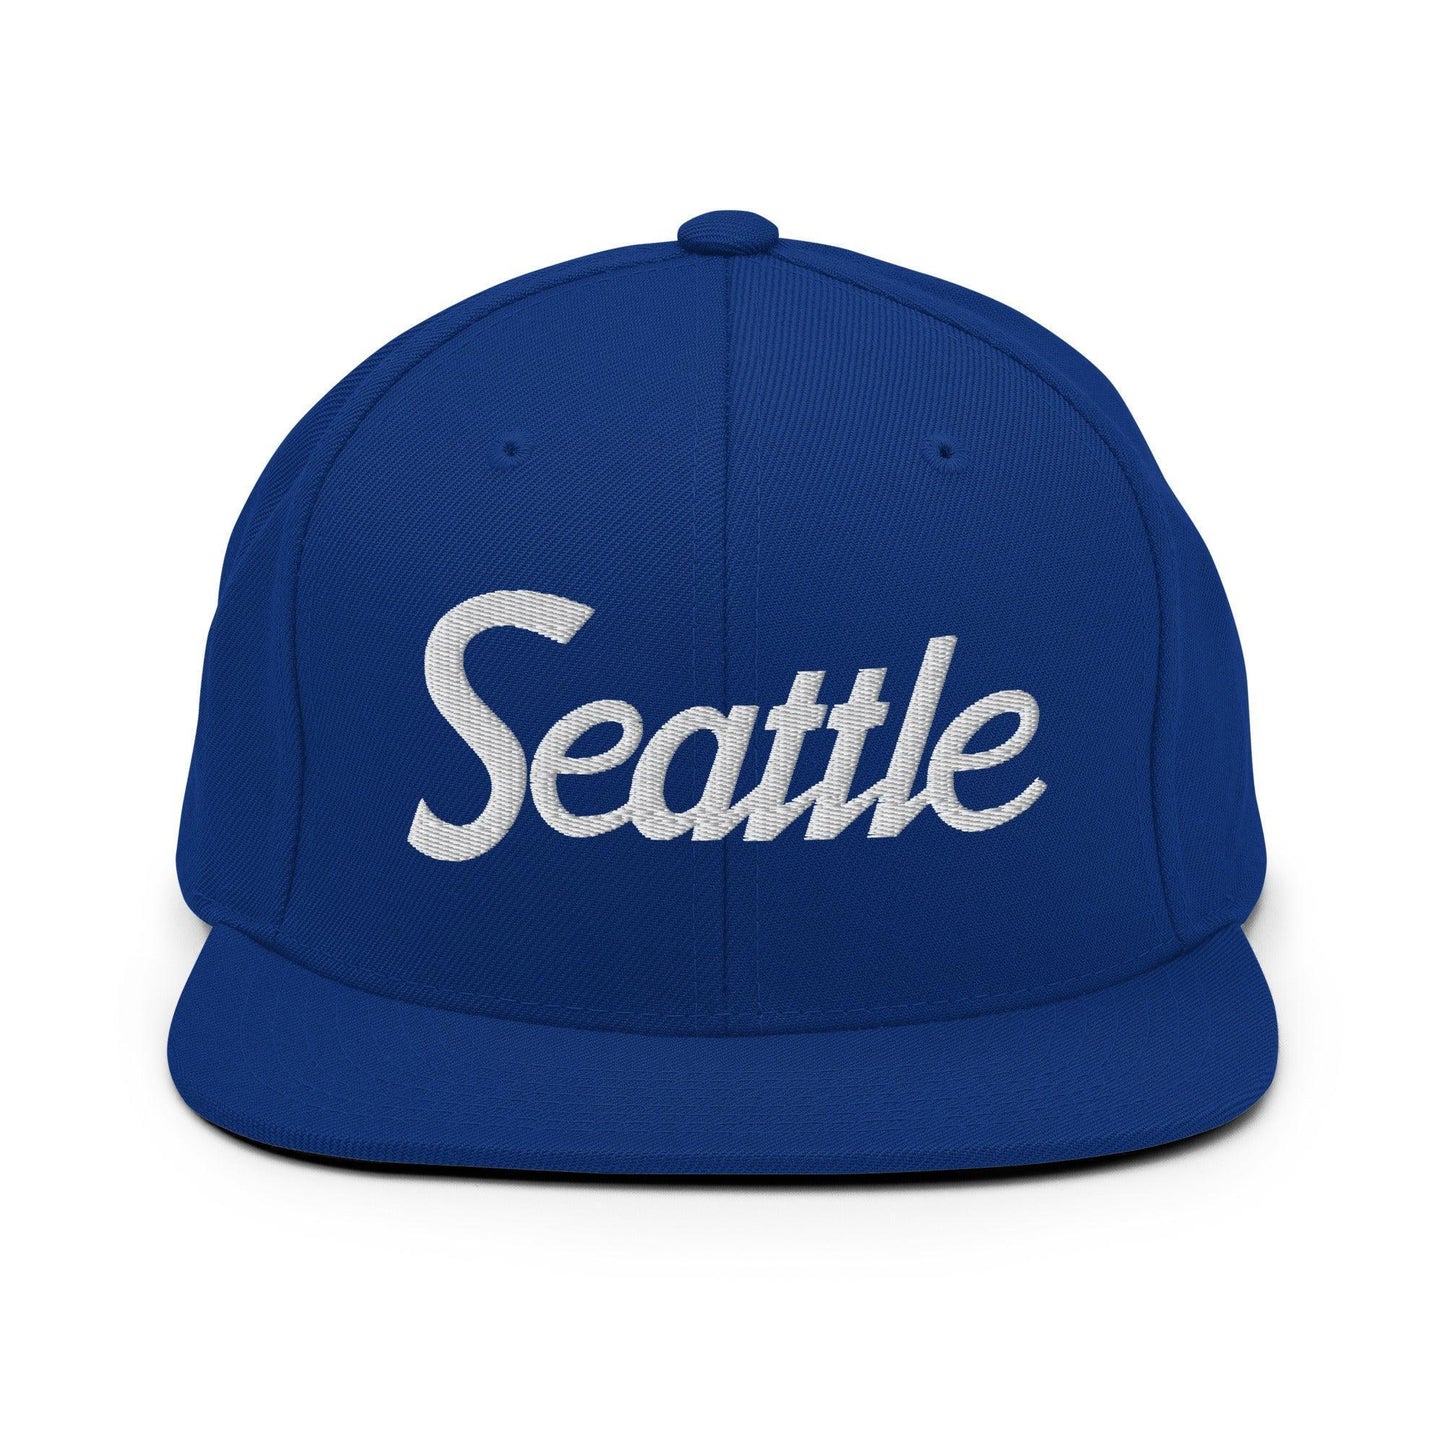 Seattle Script Snapback Hat Royal Blue